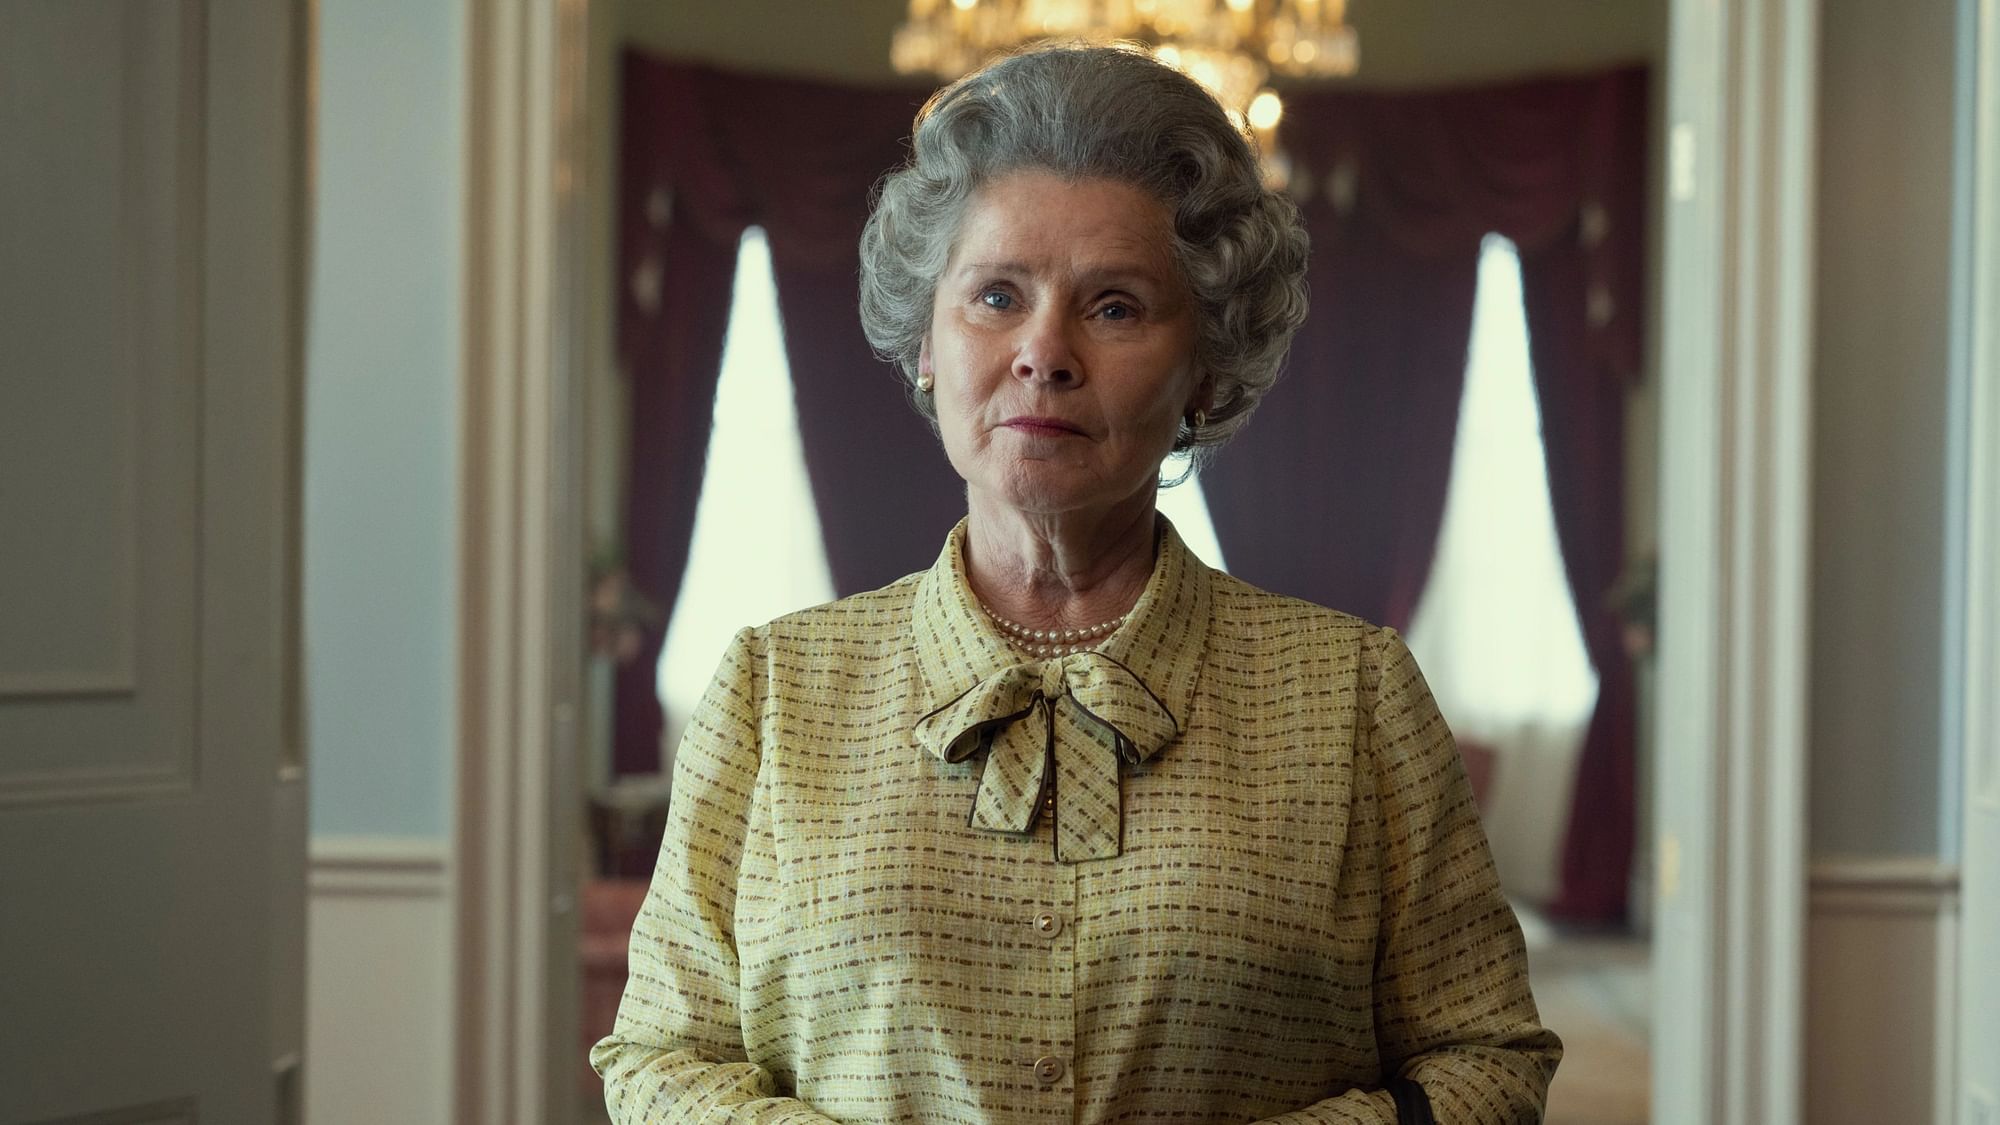 <div class="paragraphs"><p>Imelda Staunton as Queen Elizabeth II in <em>The Crown</em></p></div>